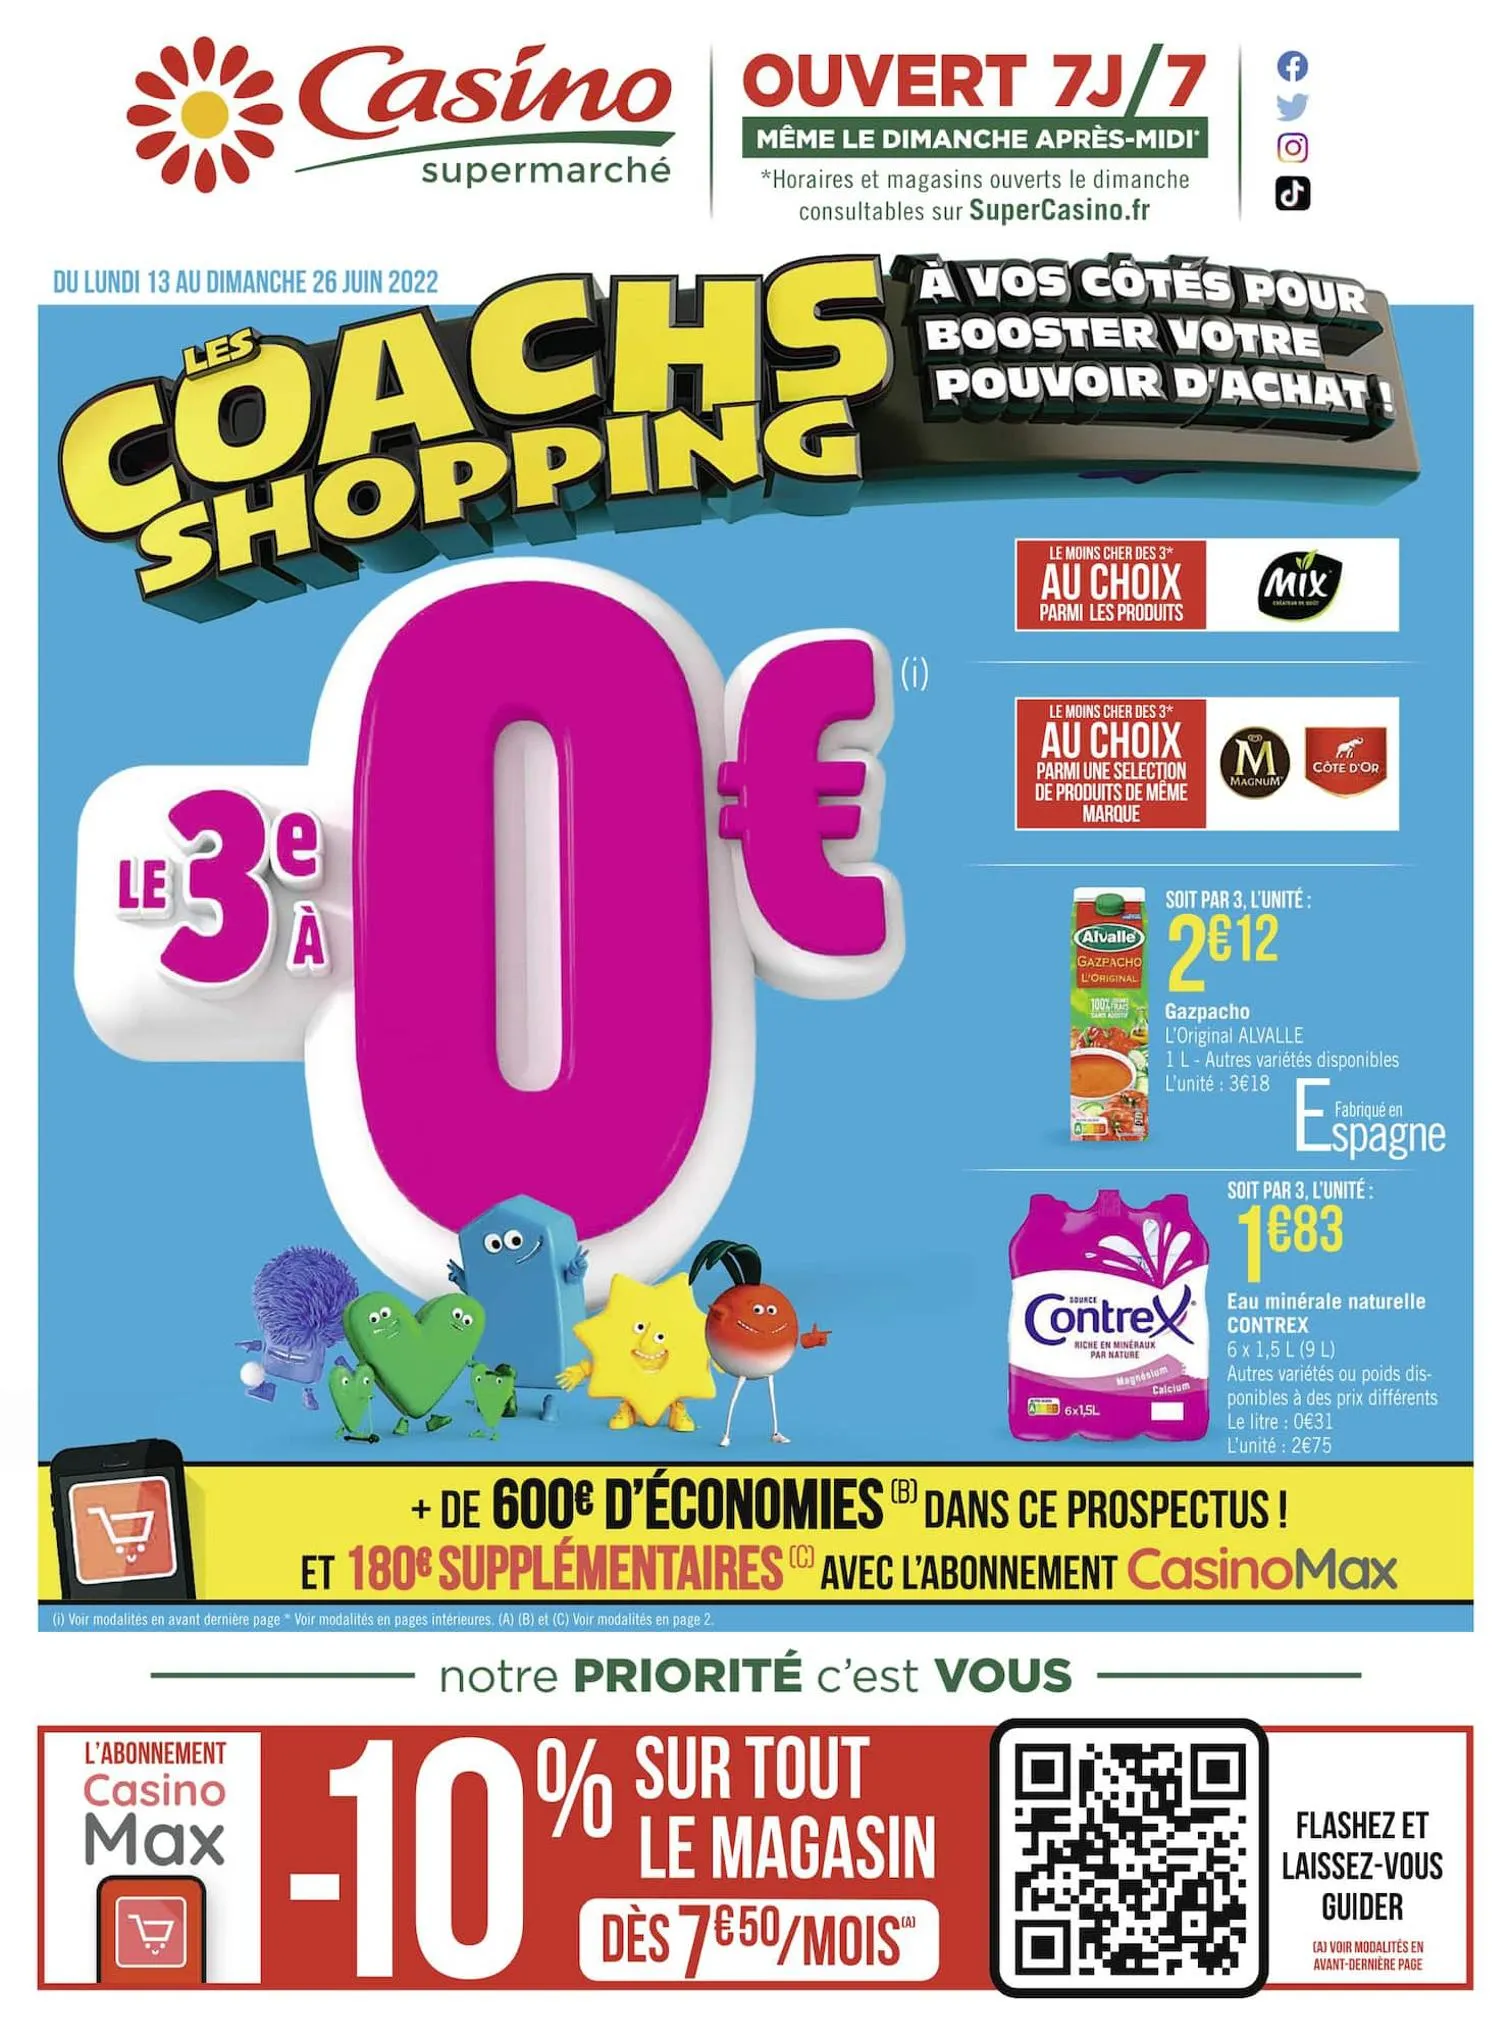 Catalogue Les coachs shopping, page 00001